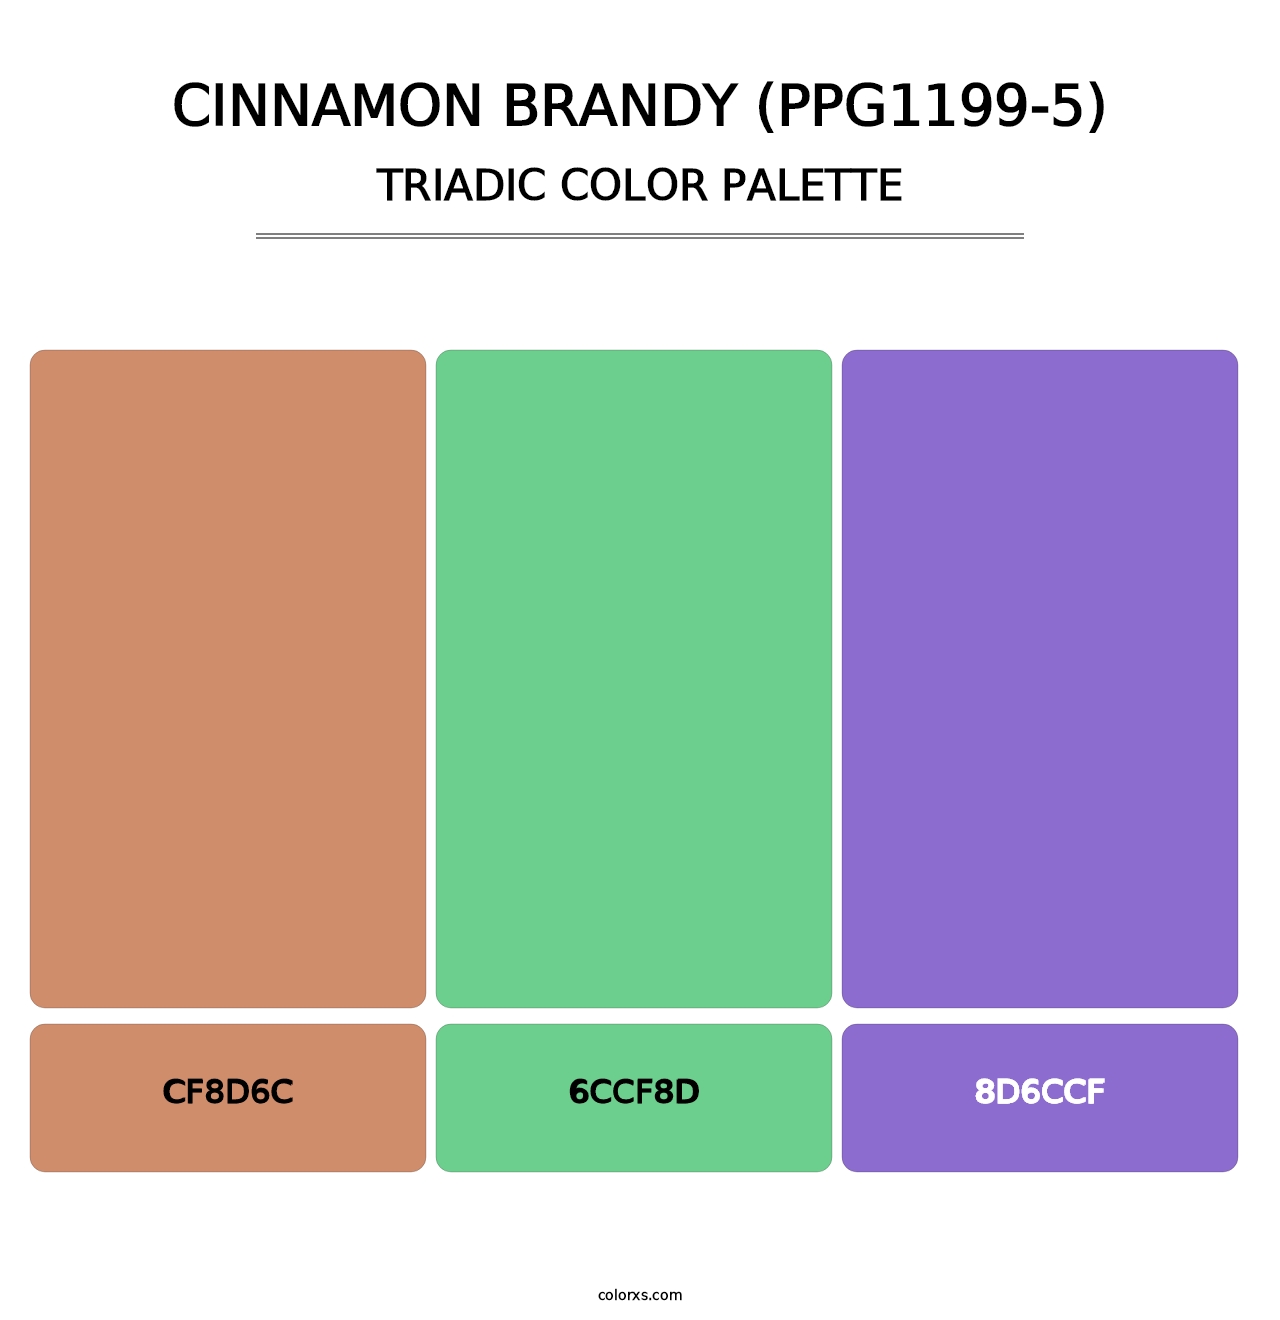 Cinnamon Brandy (PPG1199-5) - Triadic Color Palette